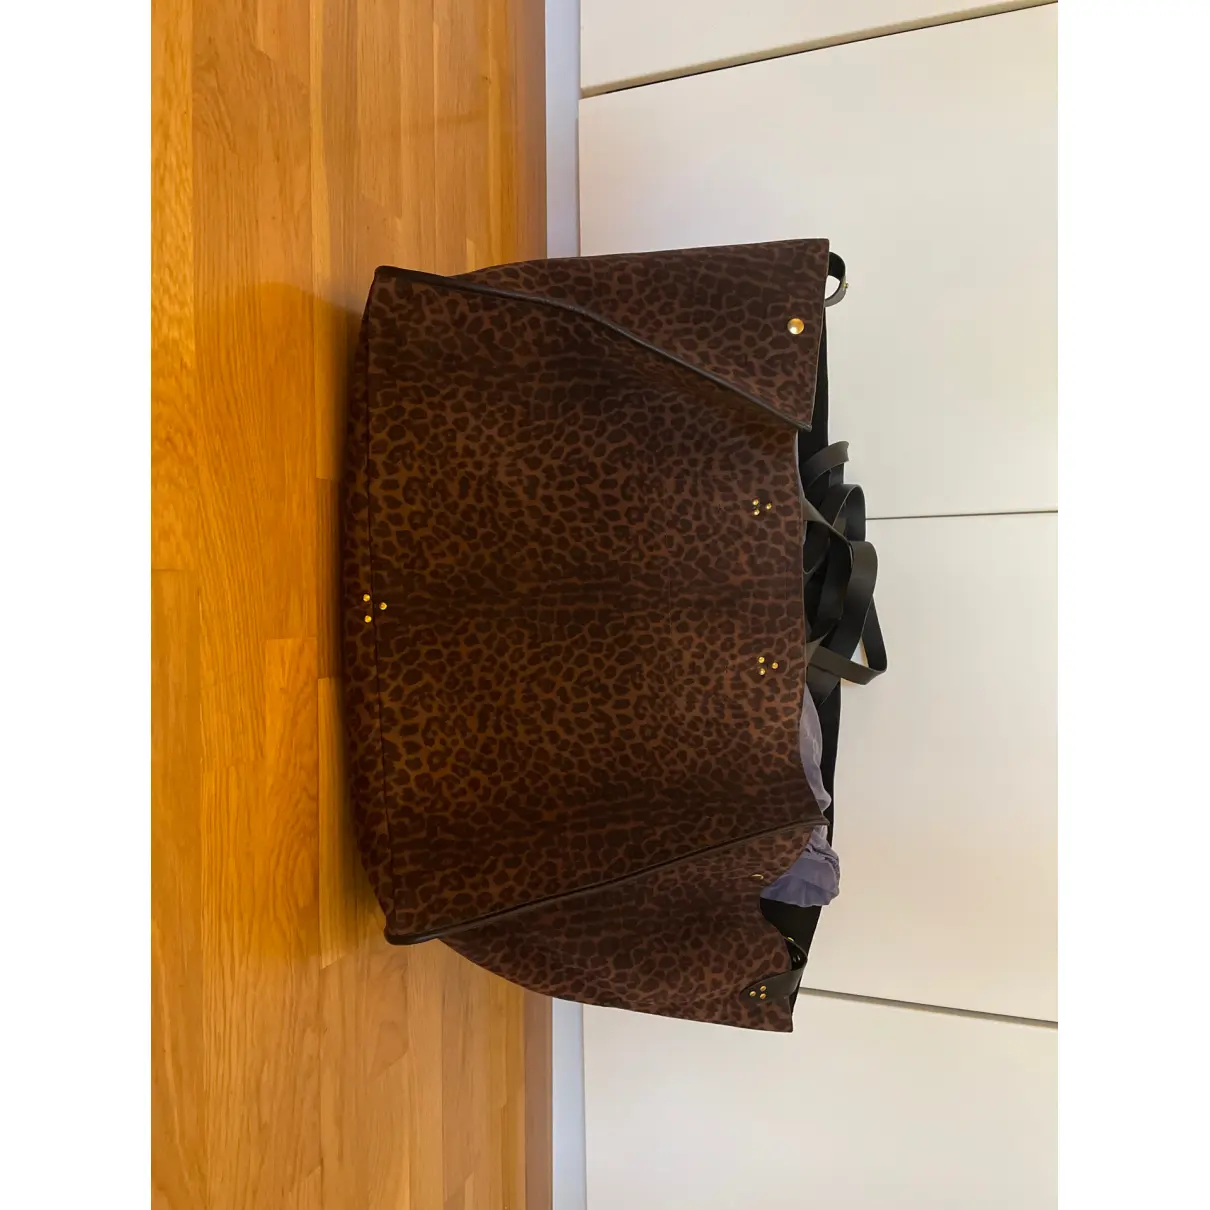 Buy Jerome Dreyfuss Leather handbag online